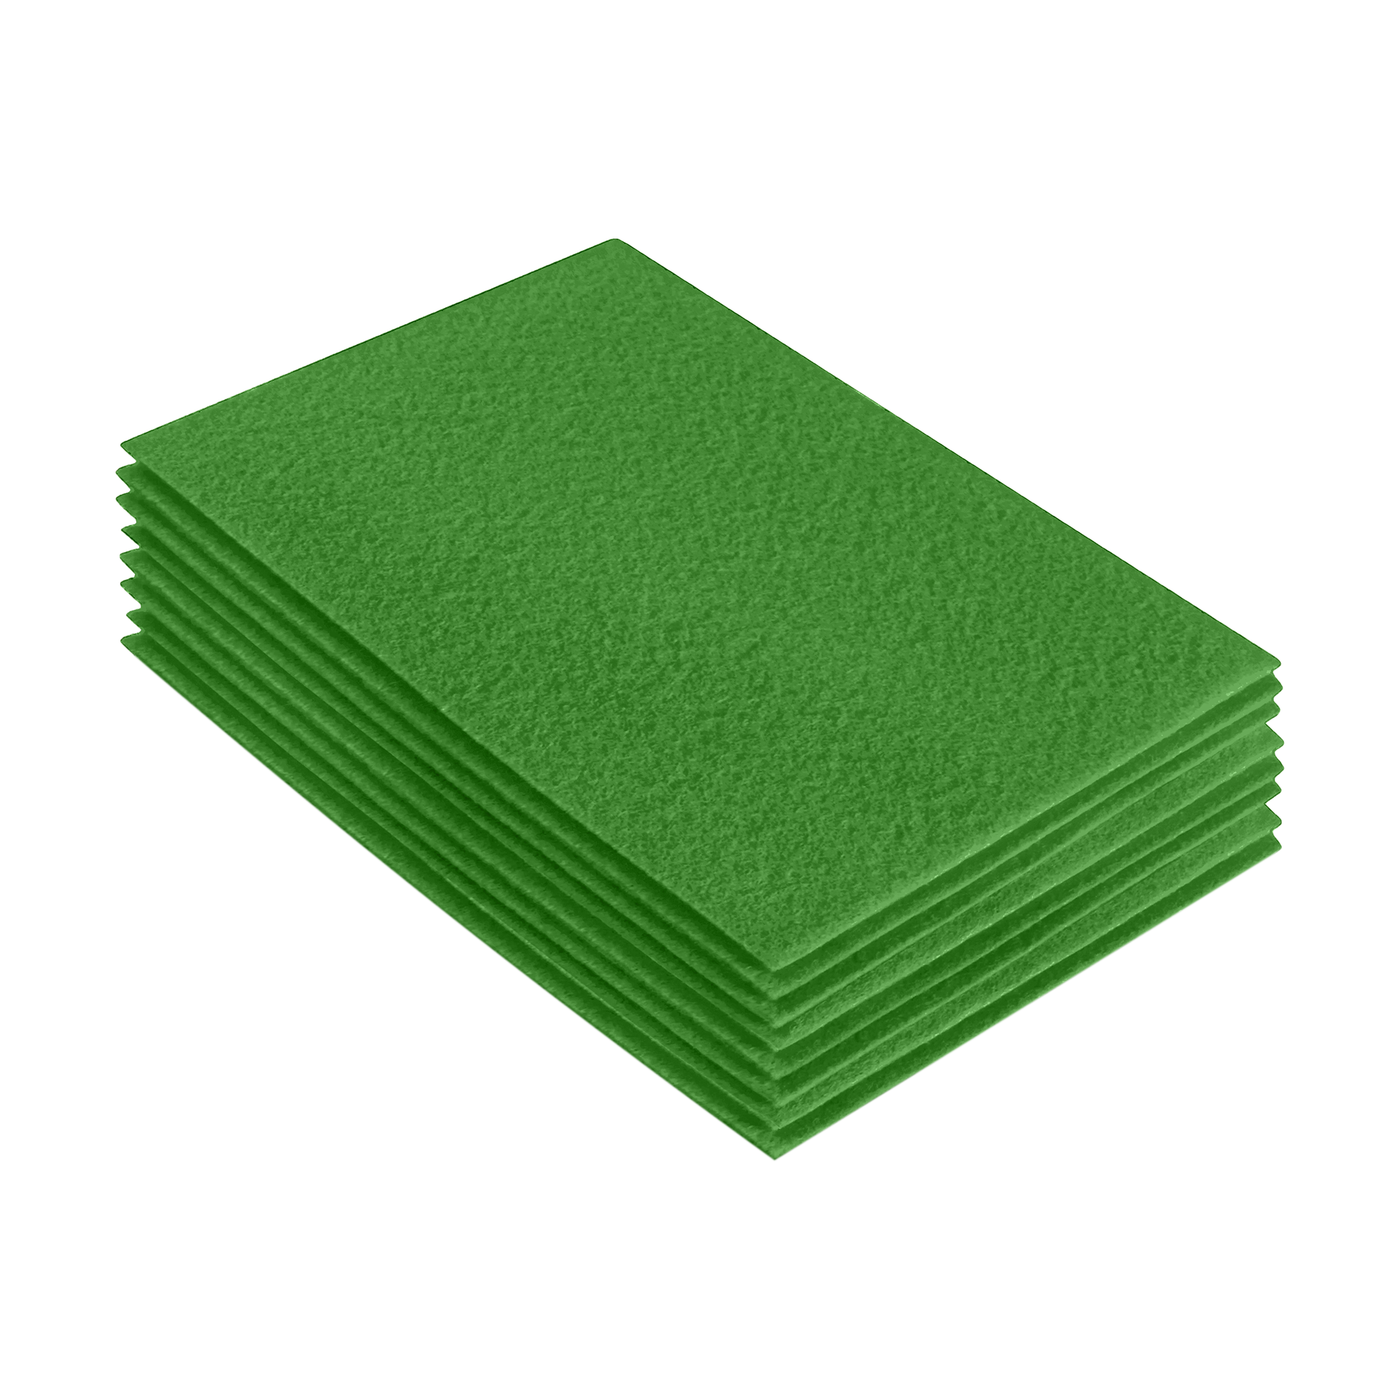 Acrylic Felt 9"X12" Sheet Packs | Green - FabricLA.com